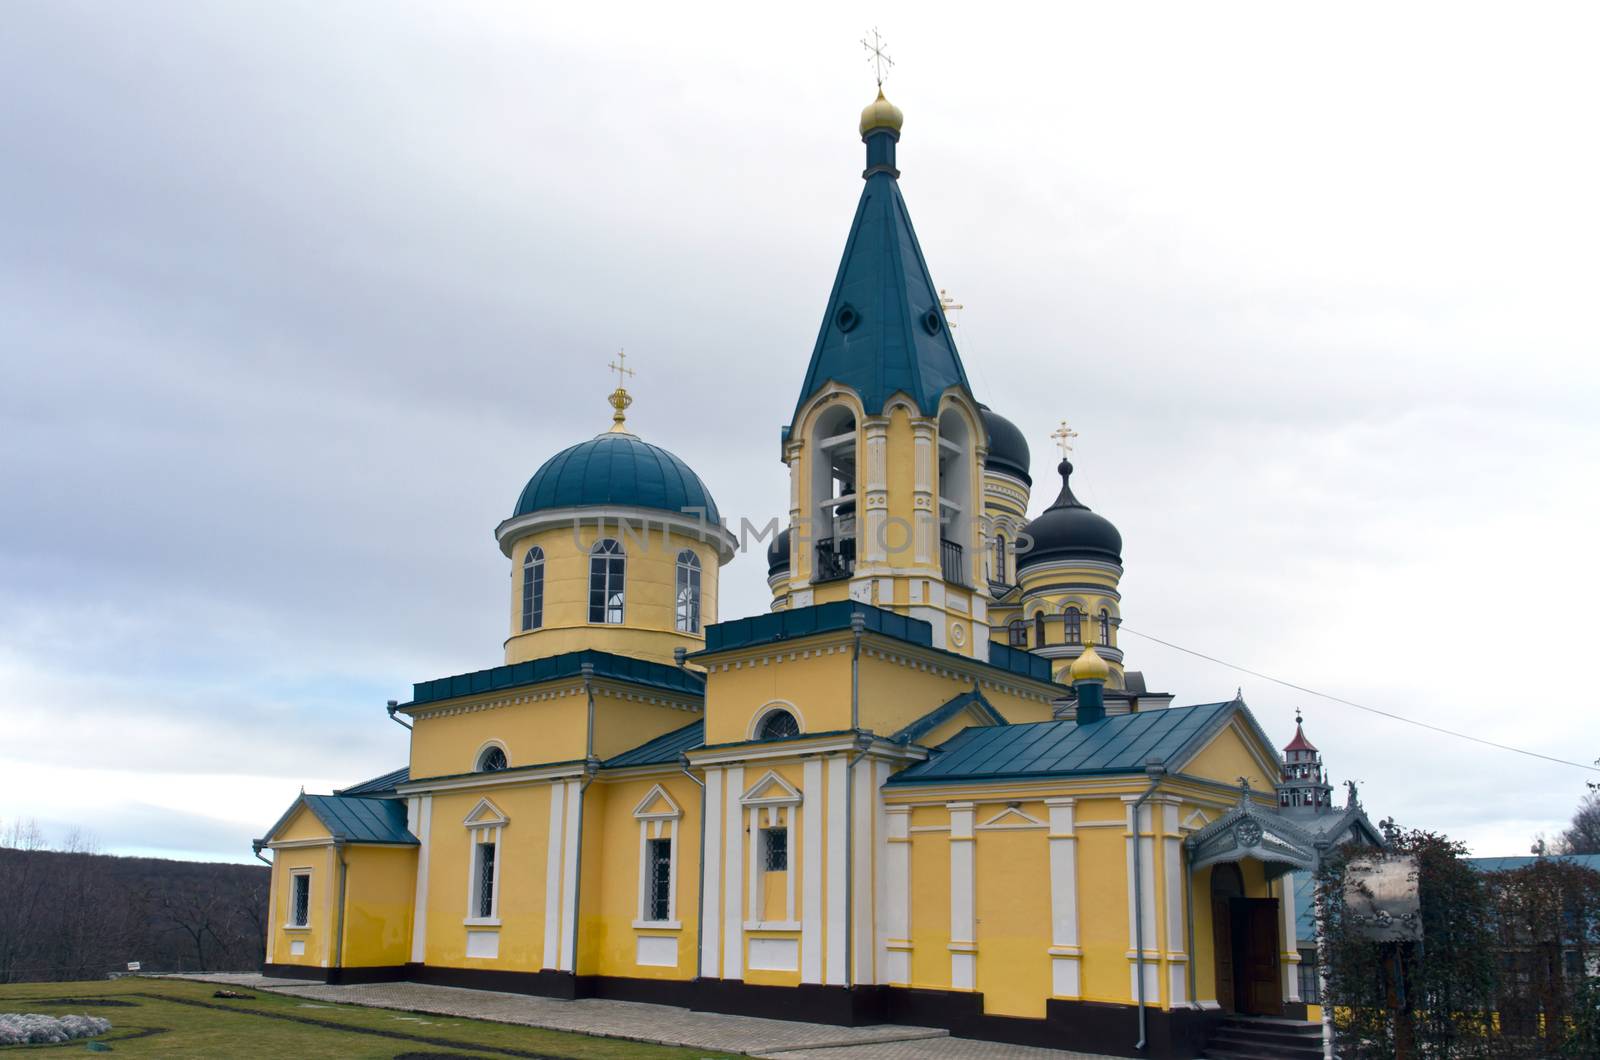 Beautiful building Orthodox monastery Hincu,Moldova.